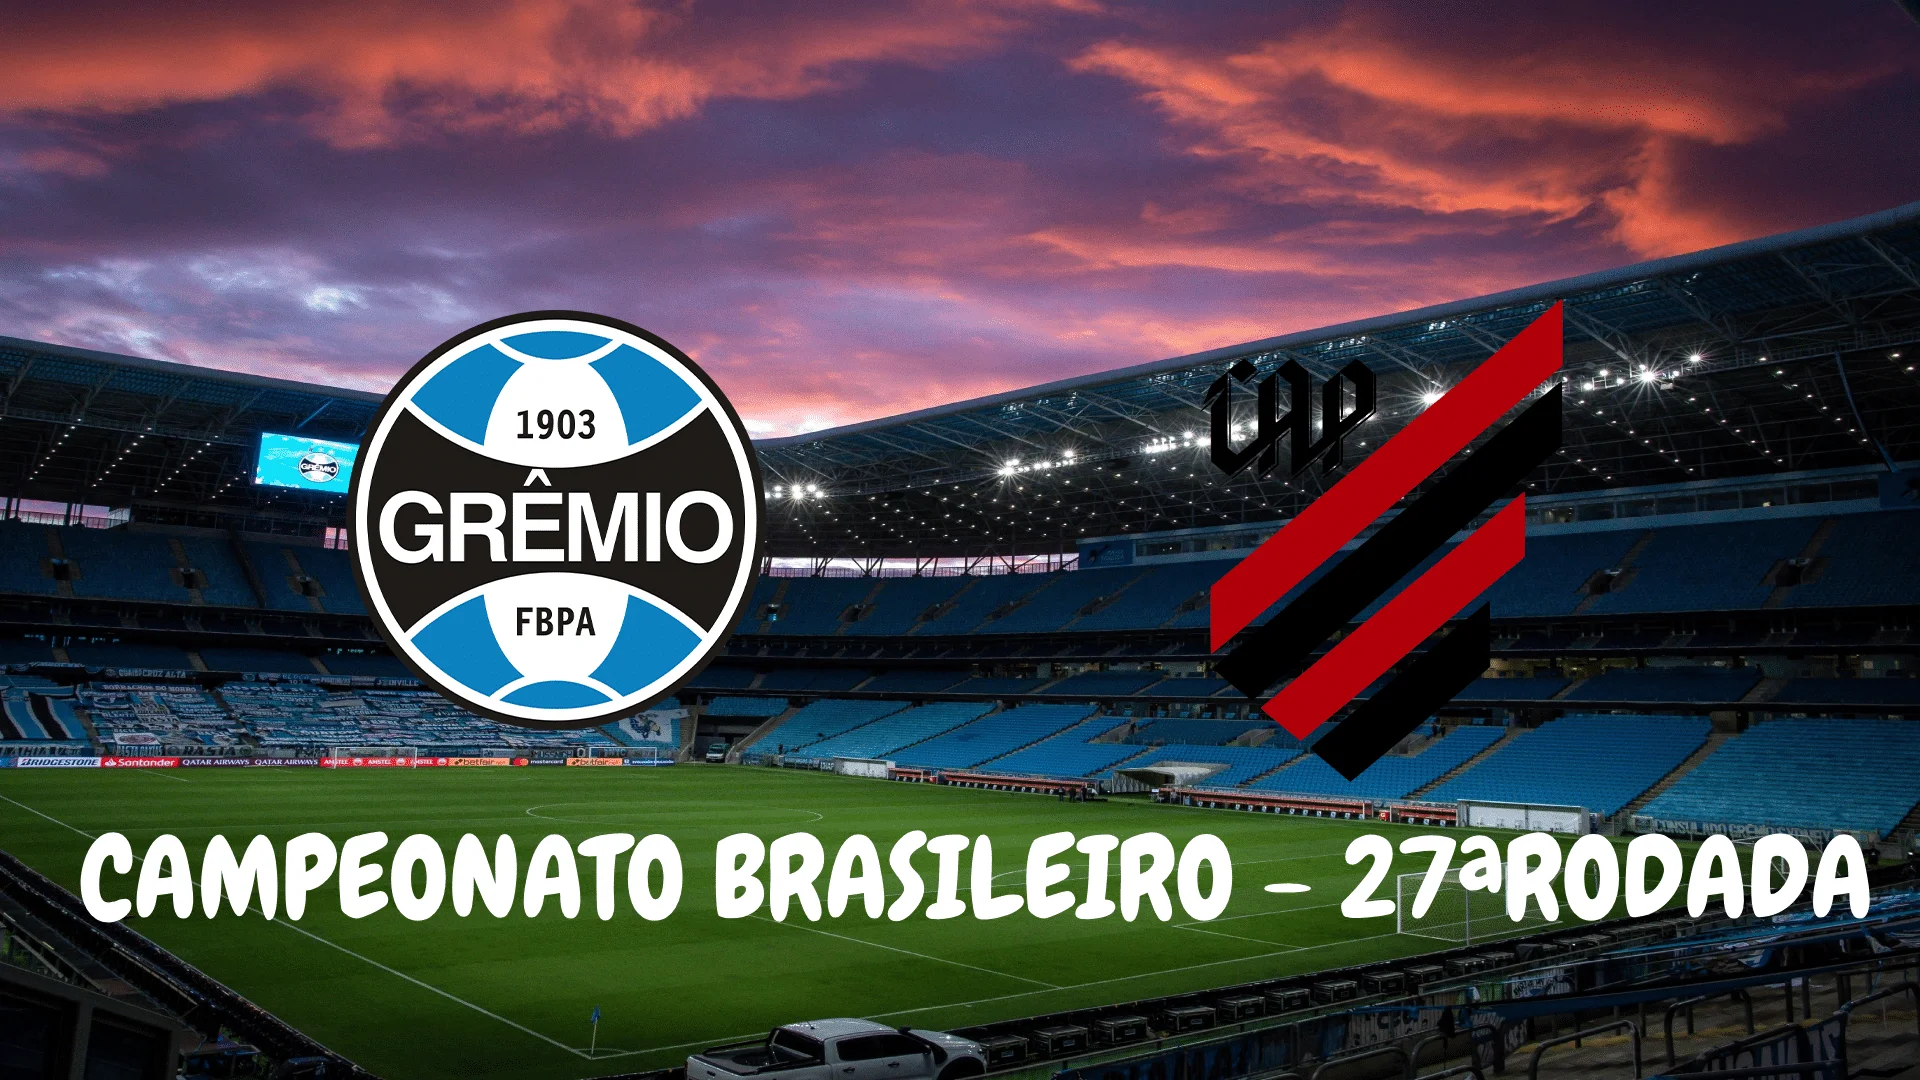 Grêmio vs Caxias: A Rivalry on the Football Field